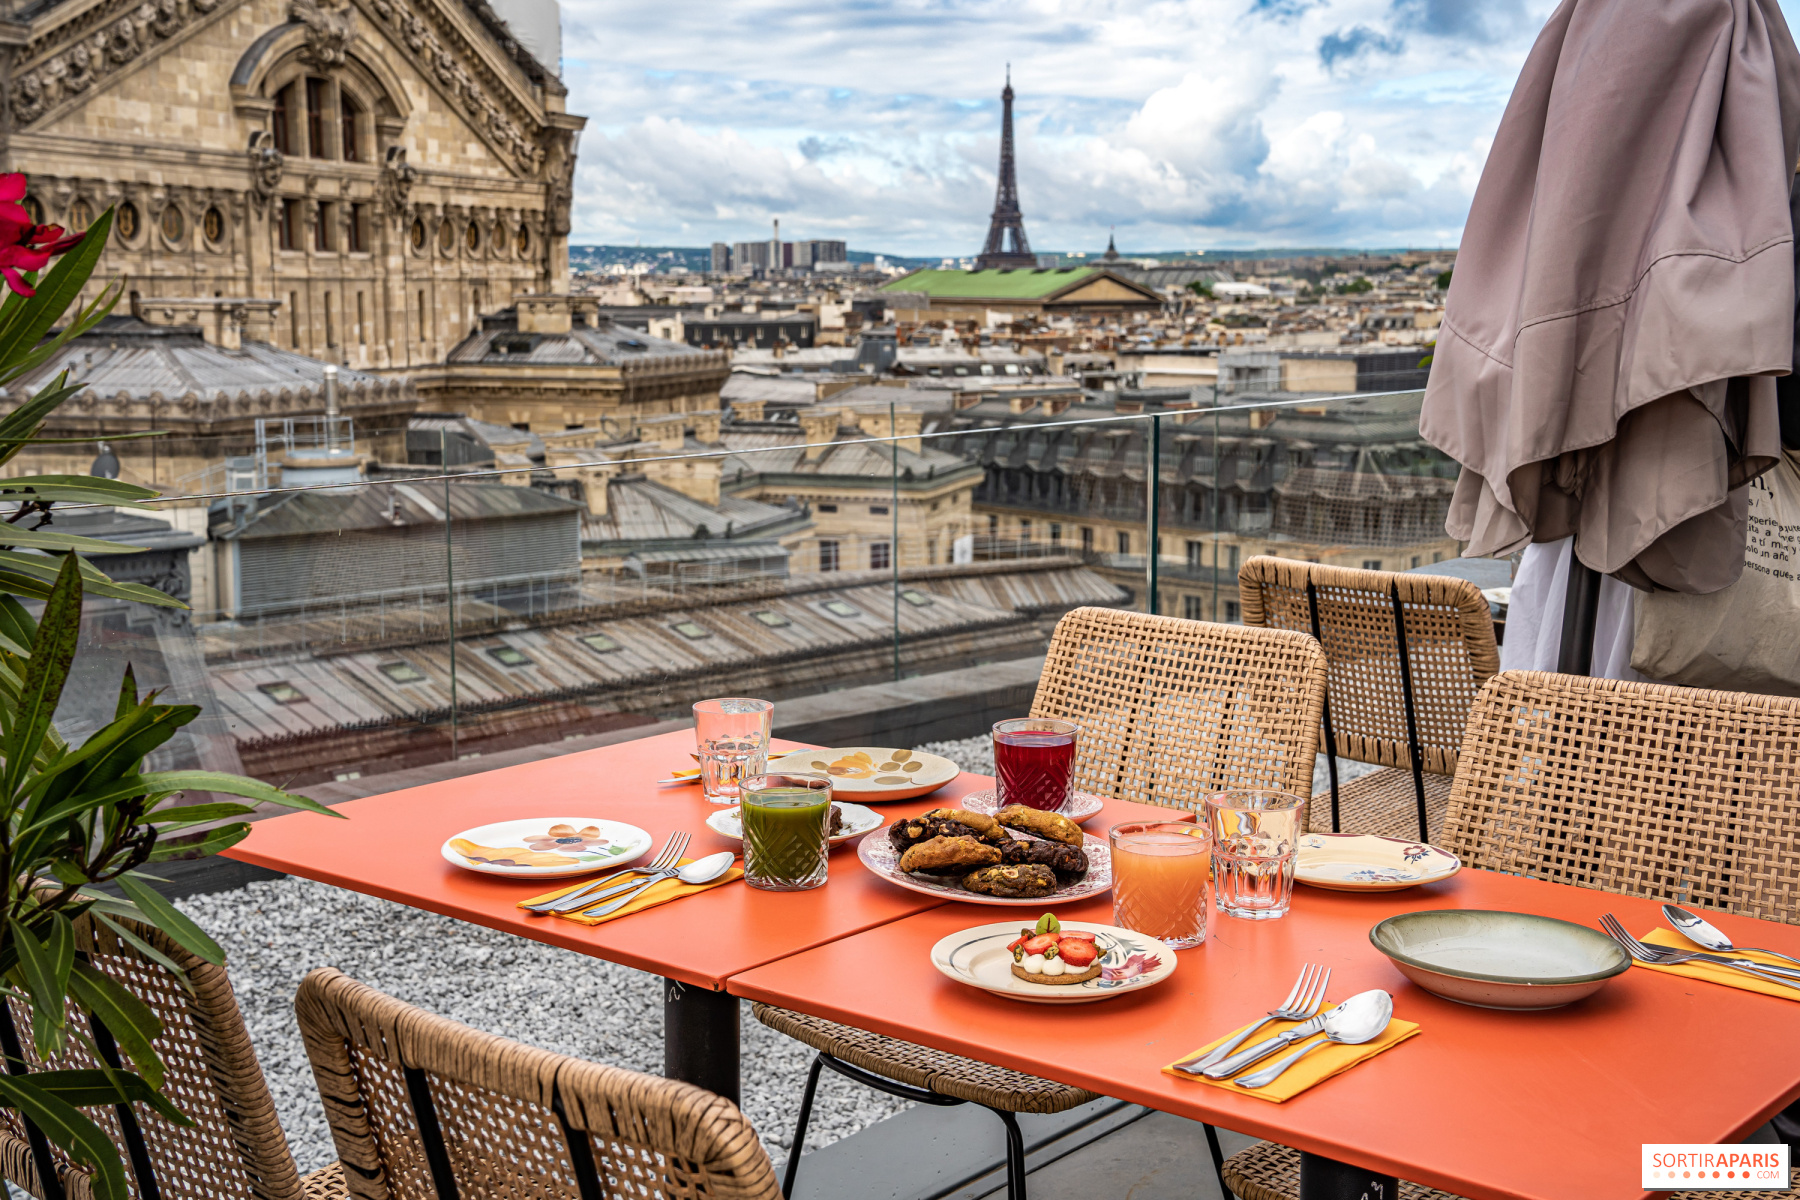 Galeries Lafayette - It's time for a rooftop dinner at Galeries Lafayette  to make the most of the sunny weather! 📸 by jezza.pritchard #paris  #parismonamour #mylittleparis #emilyinparis #巴黎 #loves_paris #parisjetaime  #parisianvibe #